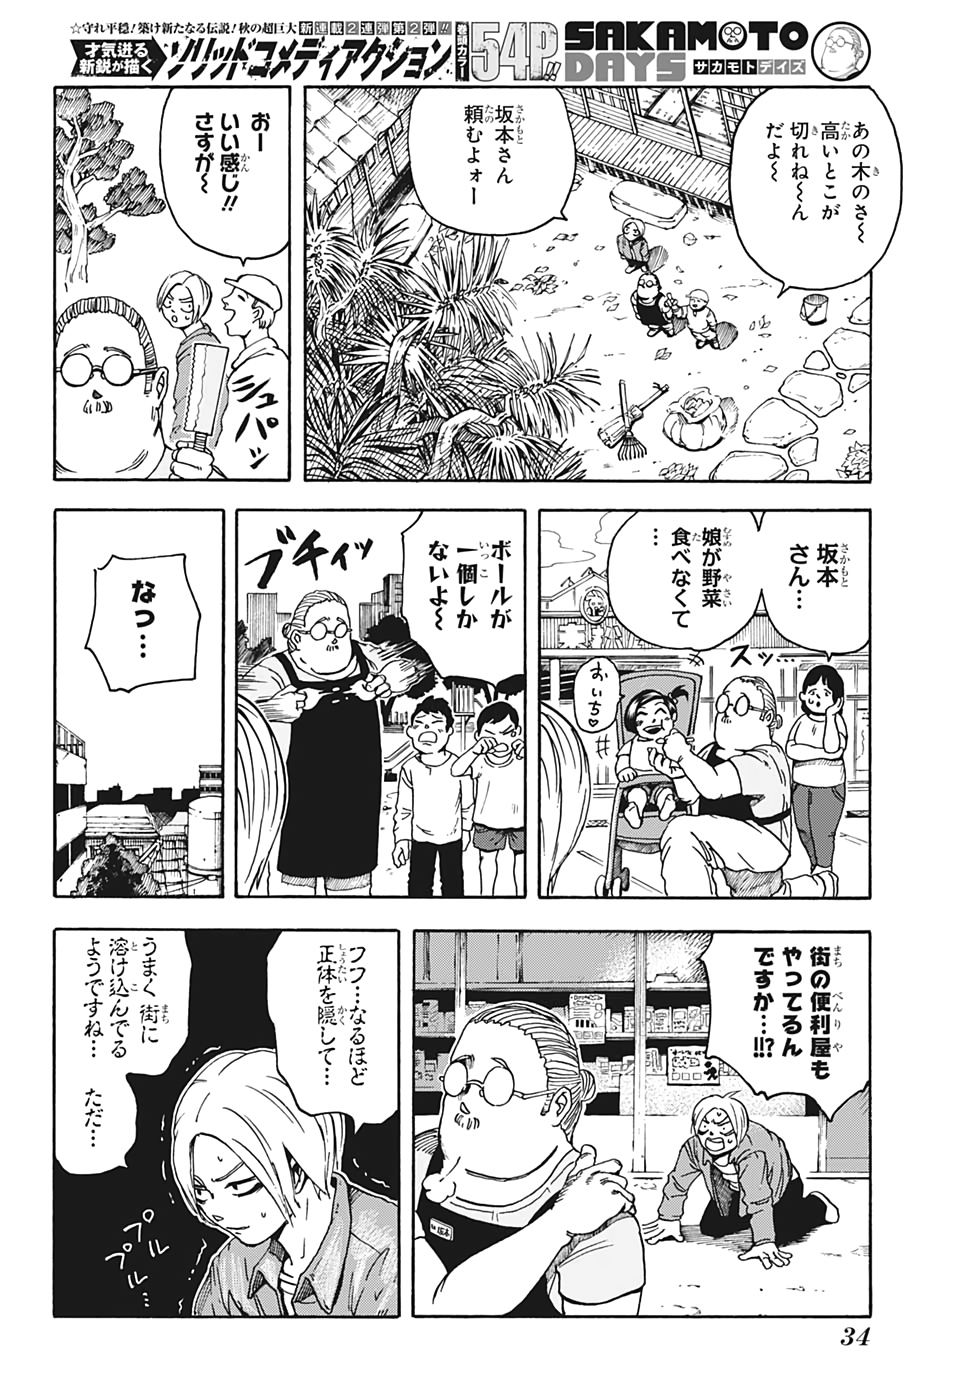 SAKAMOTO-サカモト- 第1話 - Page 19